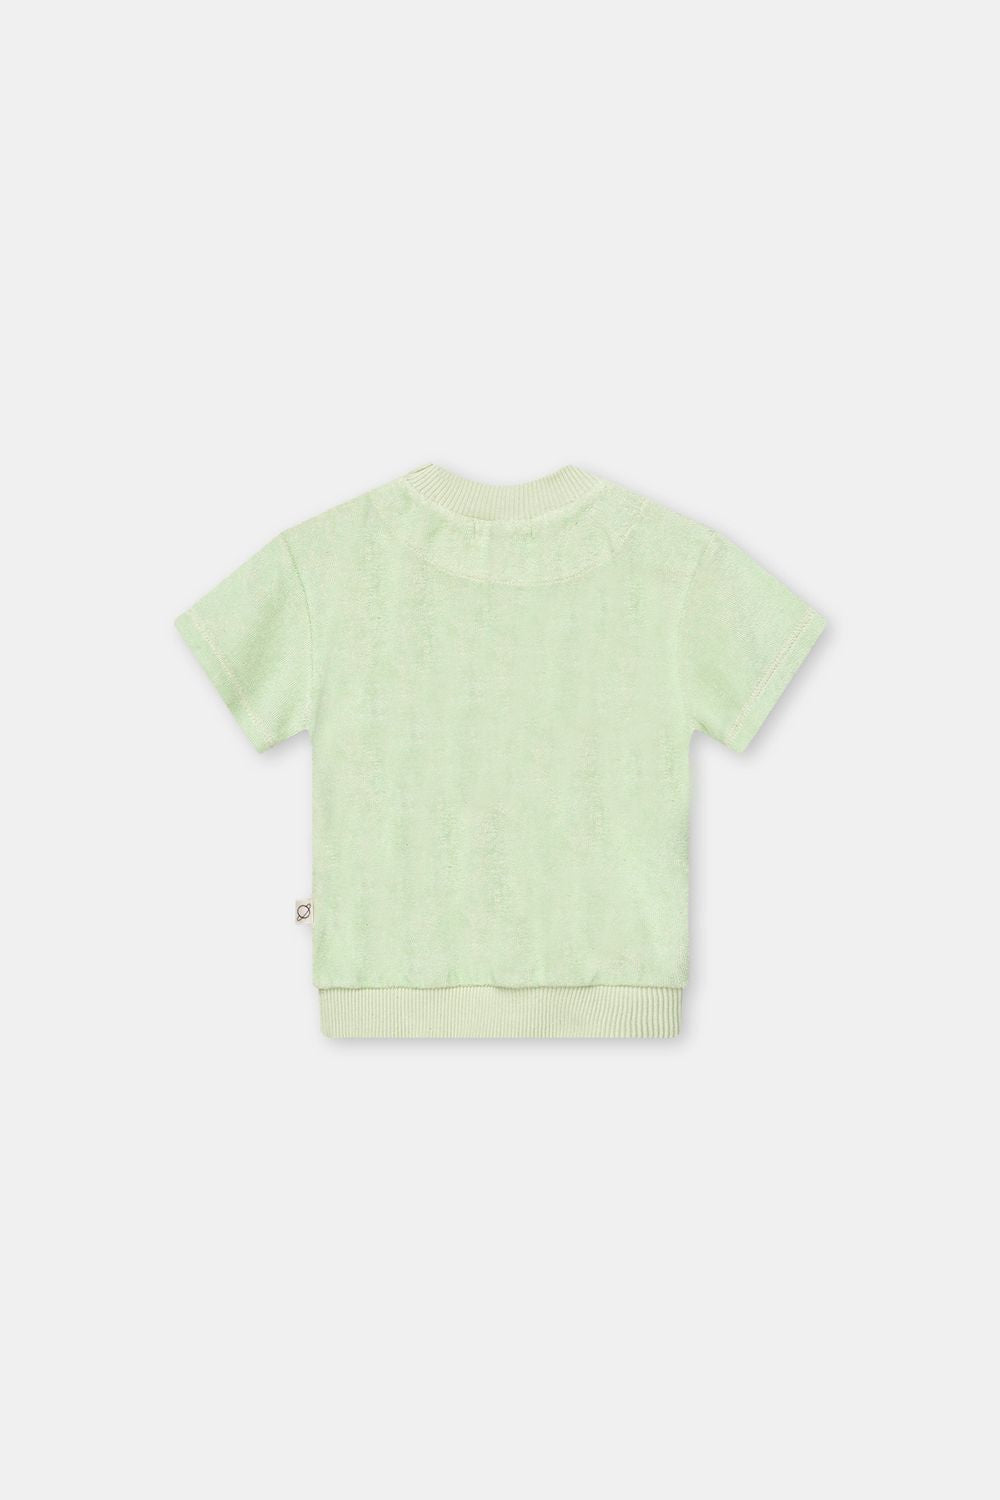 My Little Cozmo Laurel Toweling Baby T-Shirt - Green